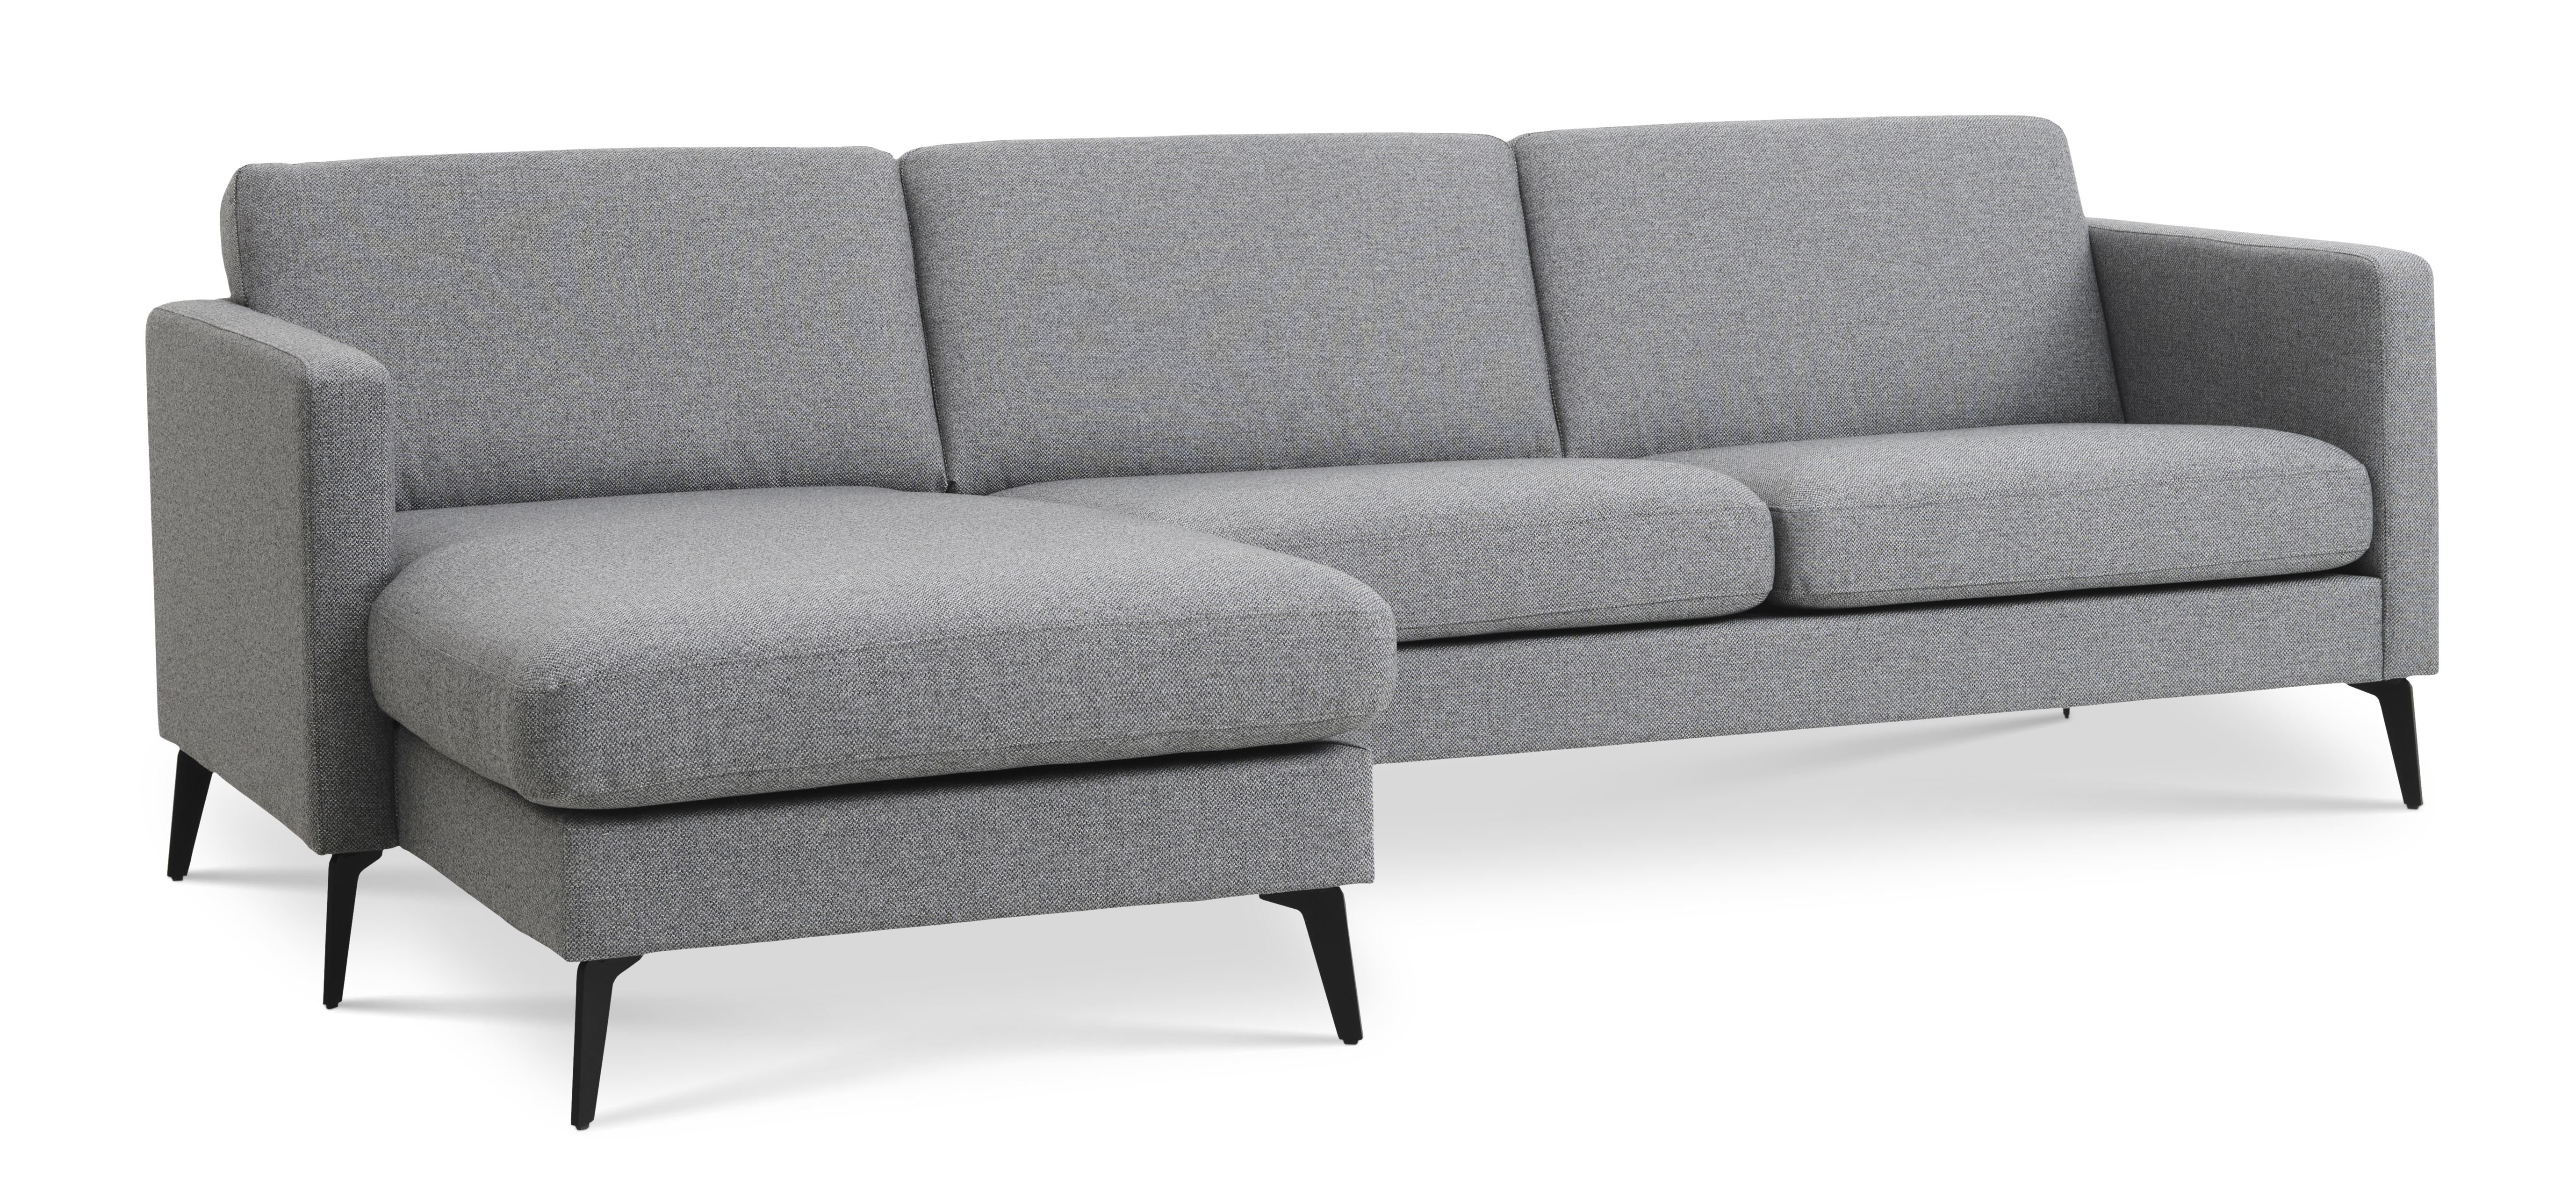 Ask sæt 51 3D sofa, m. chaiselong - lys granitgrå polyester stof og Eiffel ben